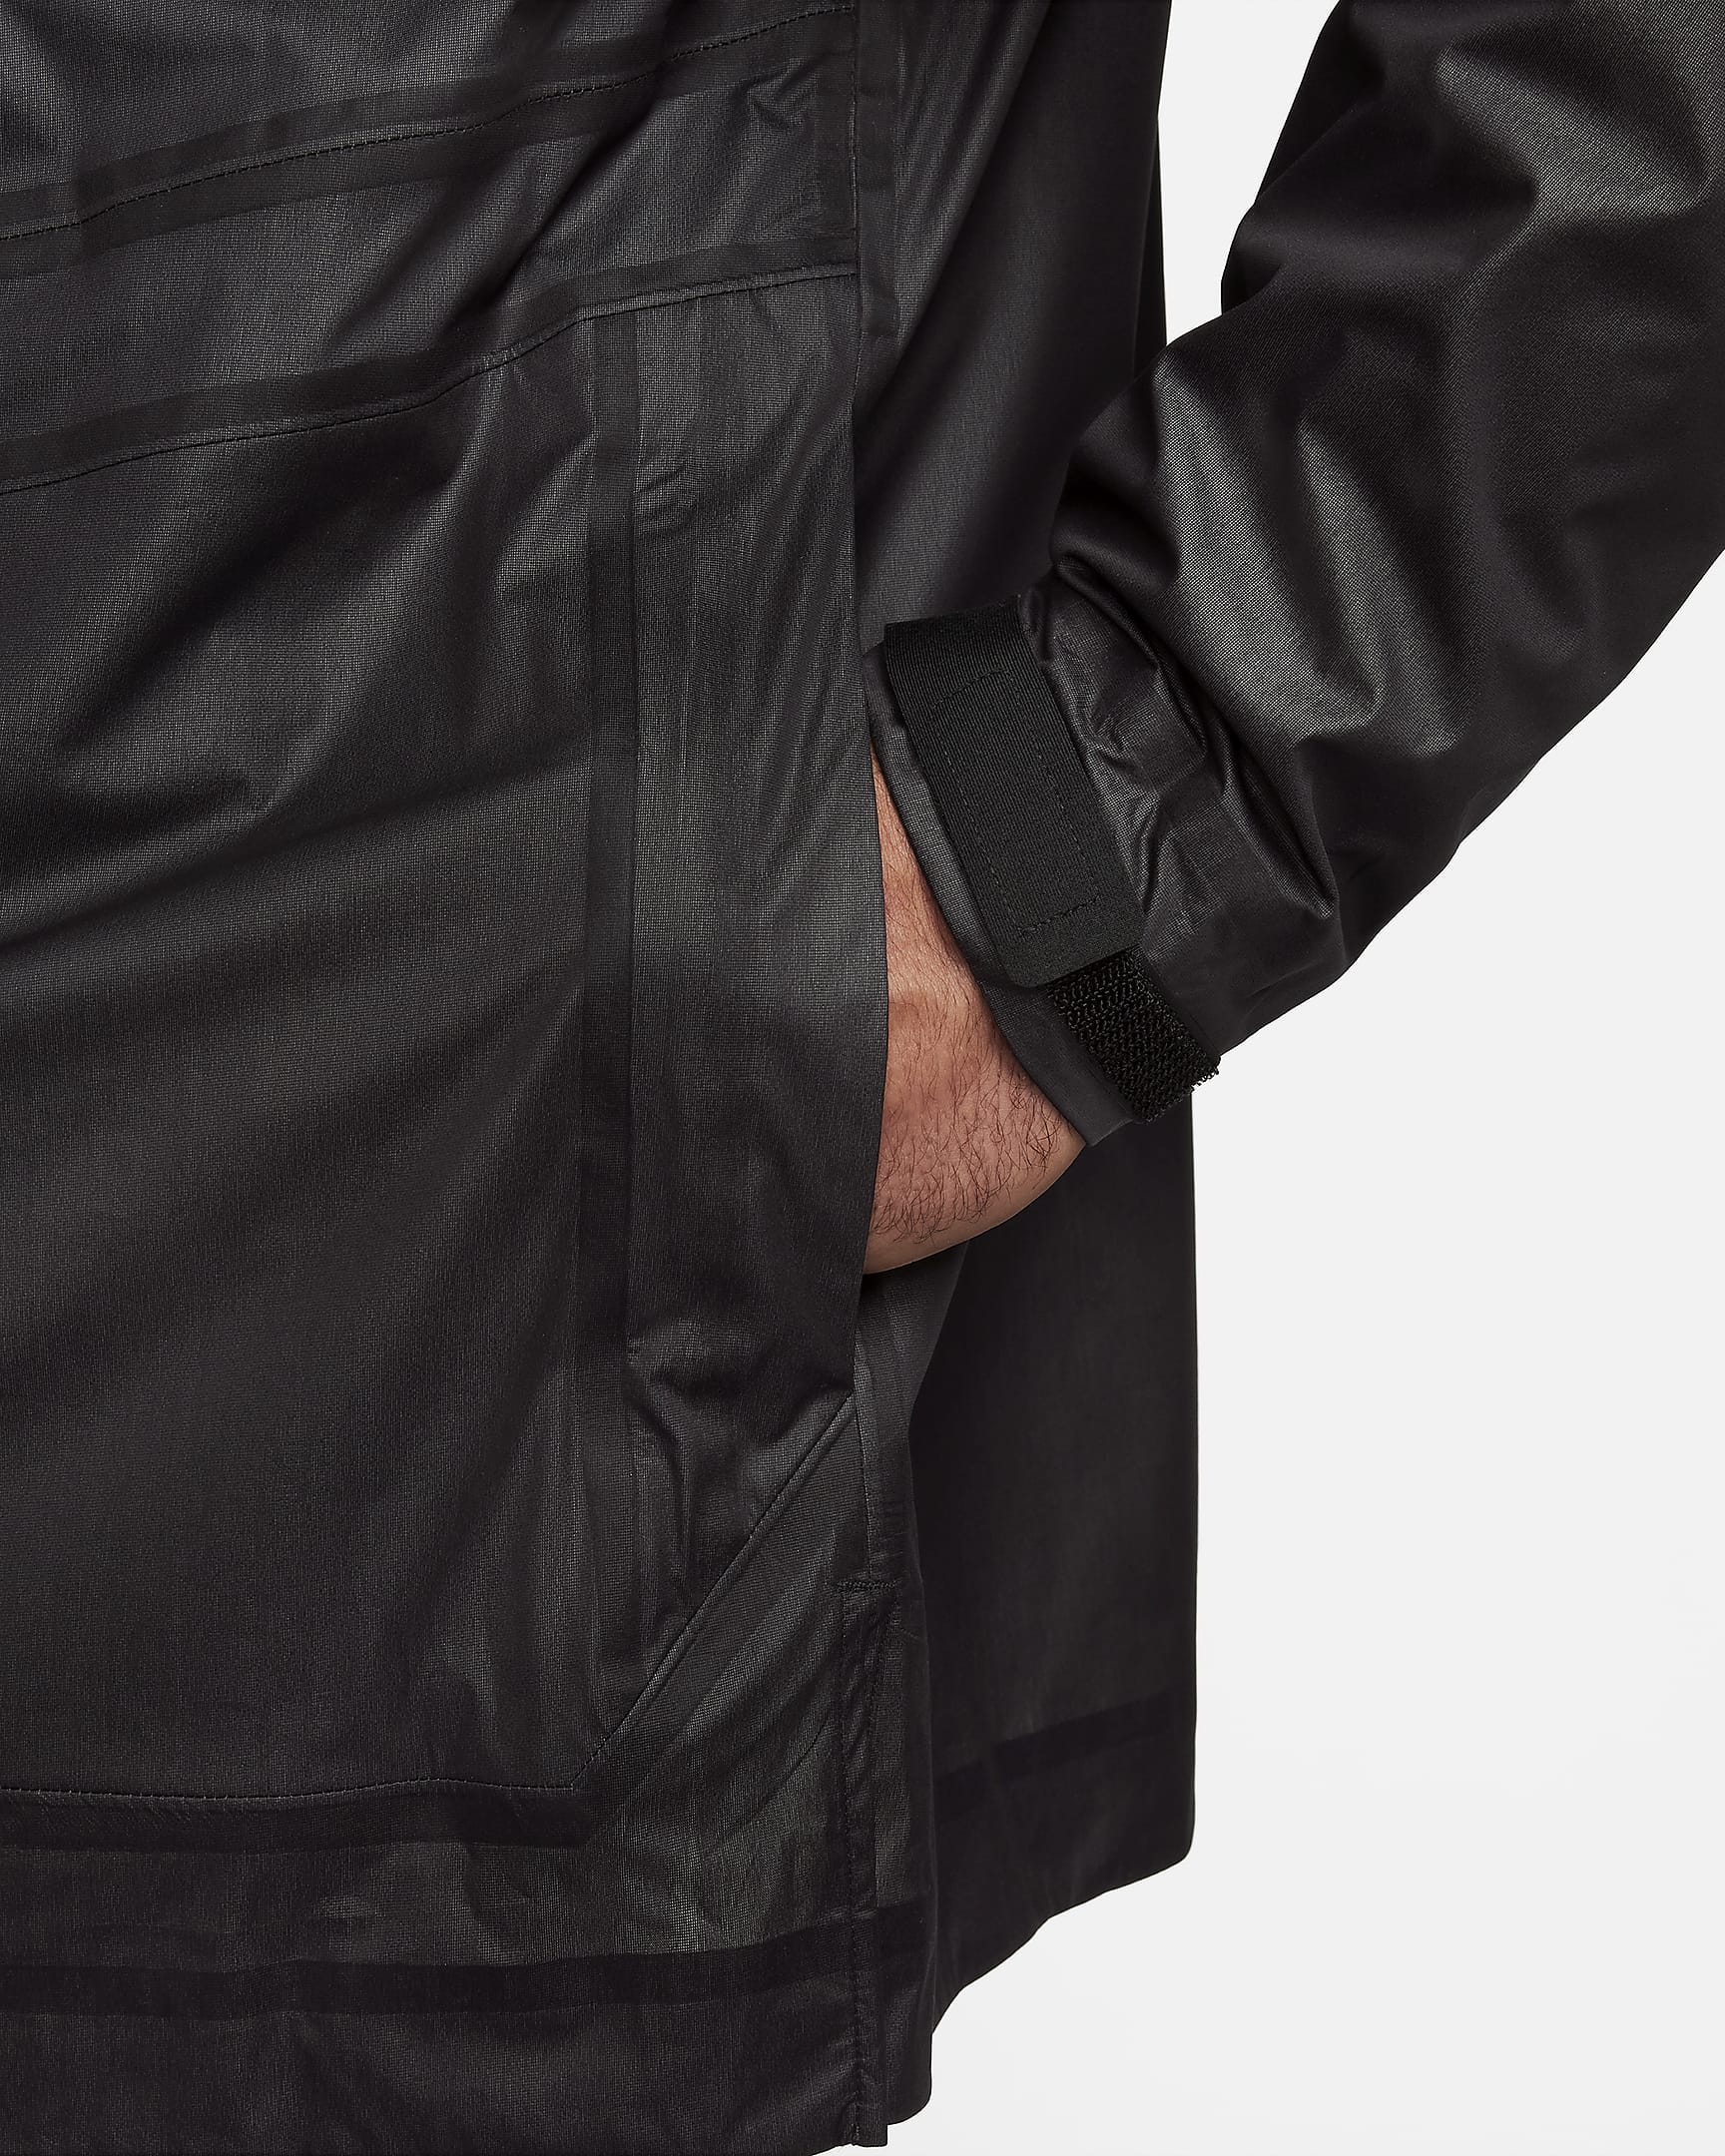 Nike Storm-FIT ADV Men's Full-Zip Golf Jacket - Black/Black/Anthracite/White